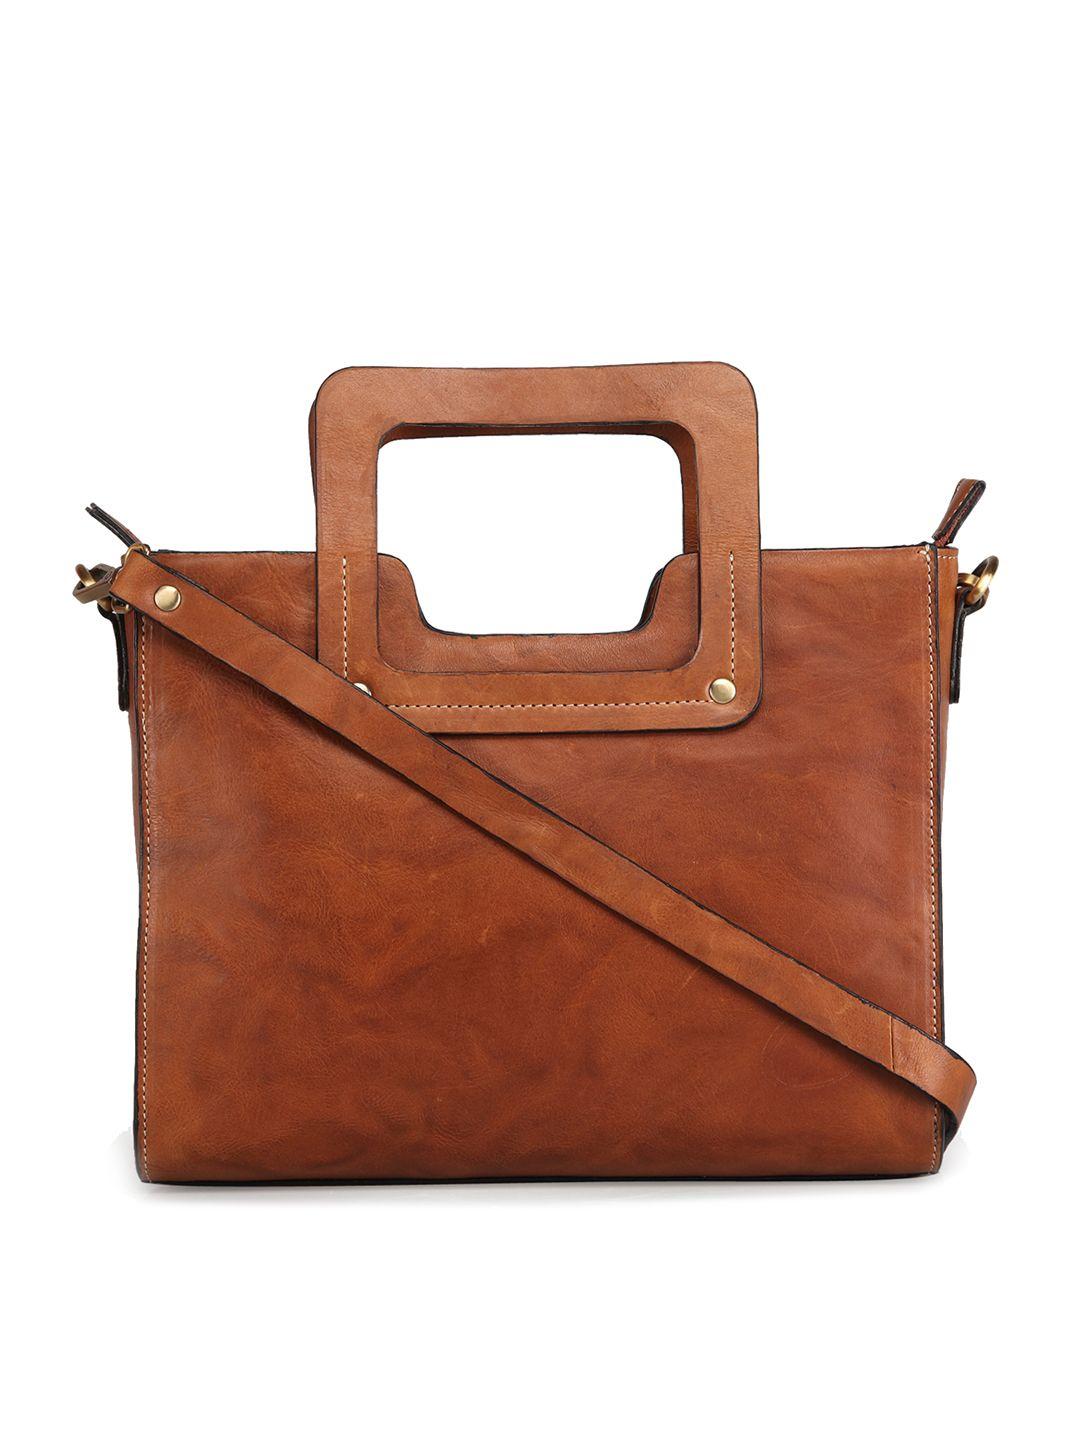 genwayne leather structured handheld bag